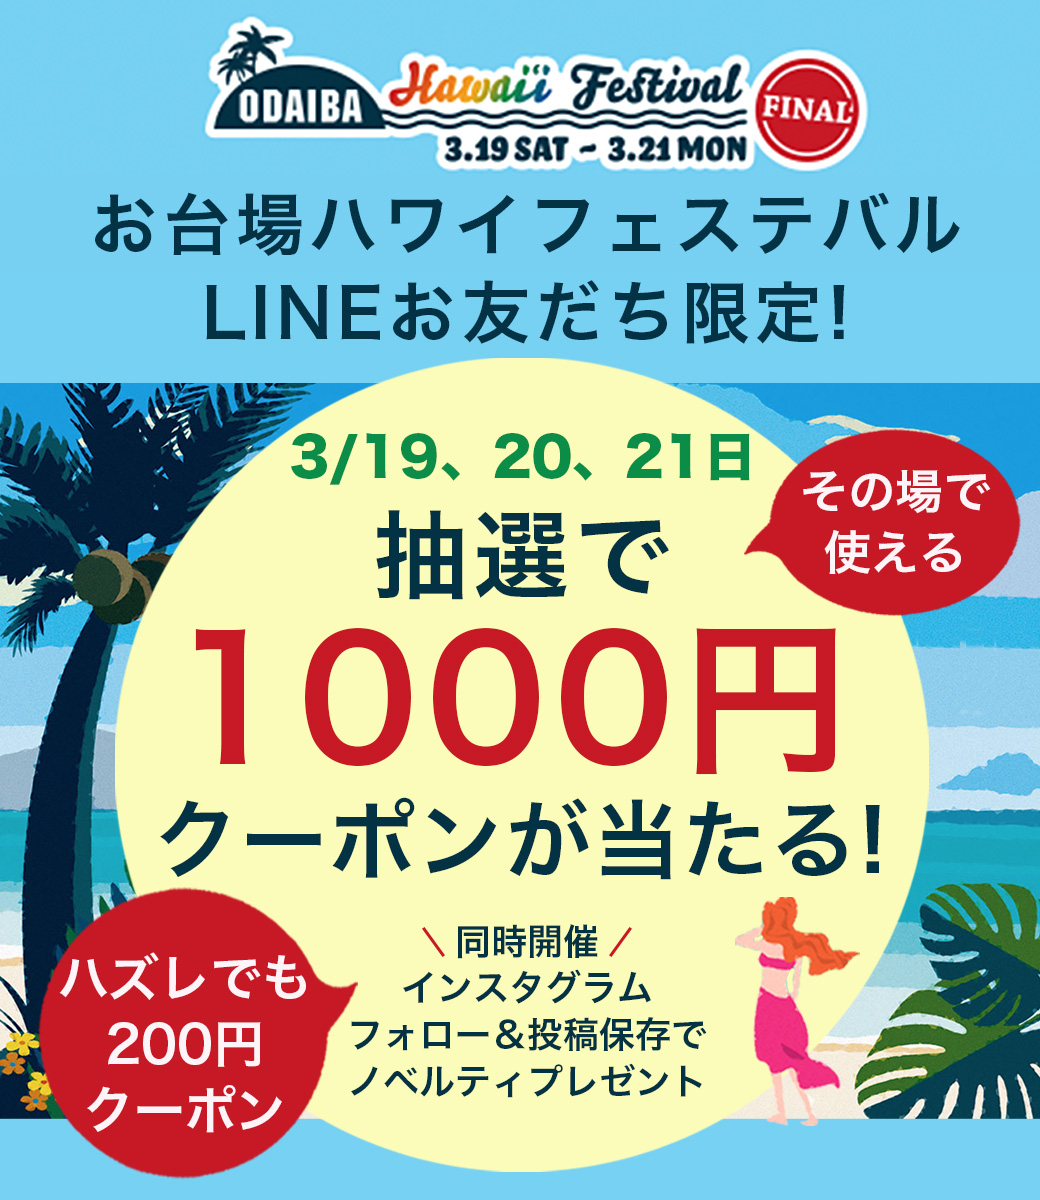 line_odaiba_pop.jpg